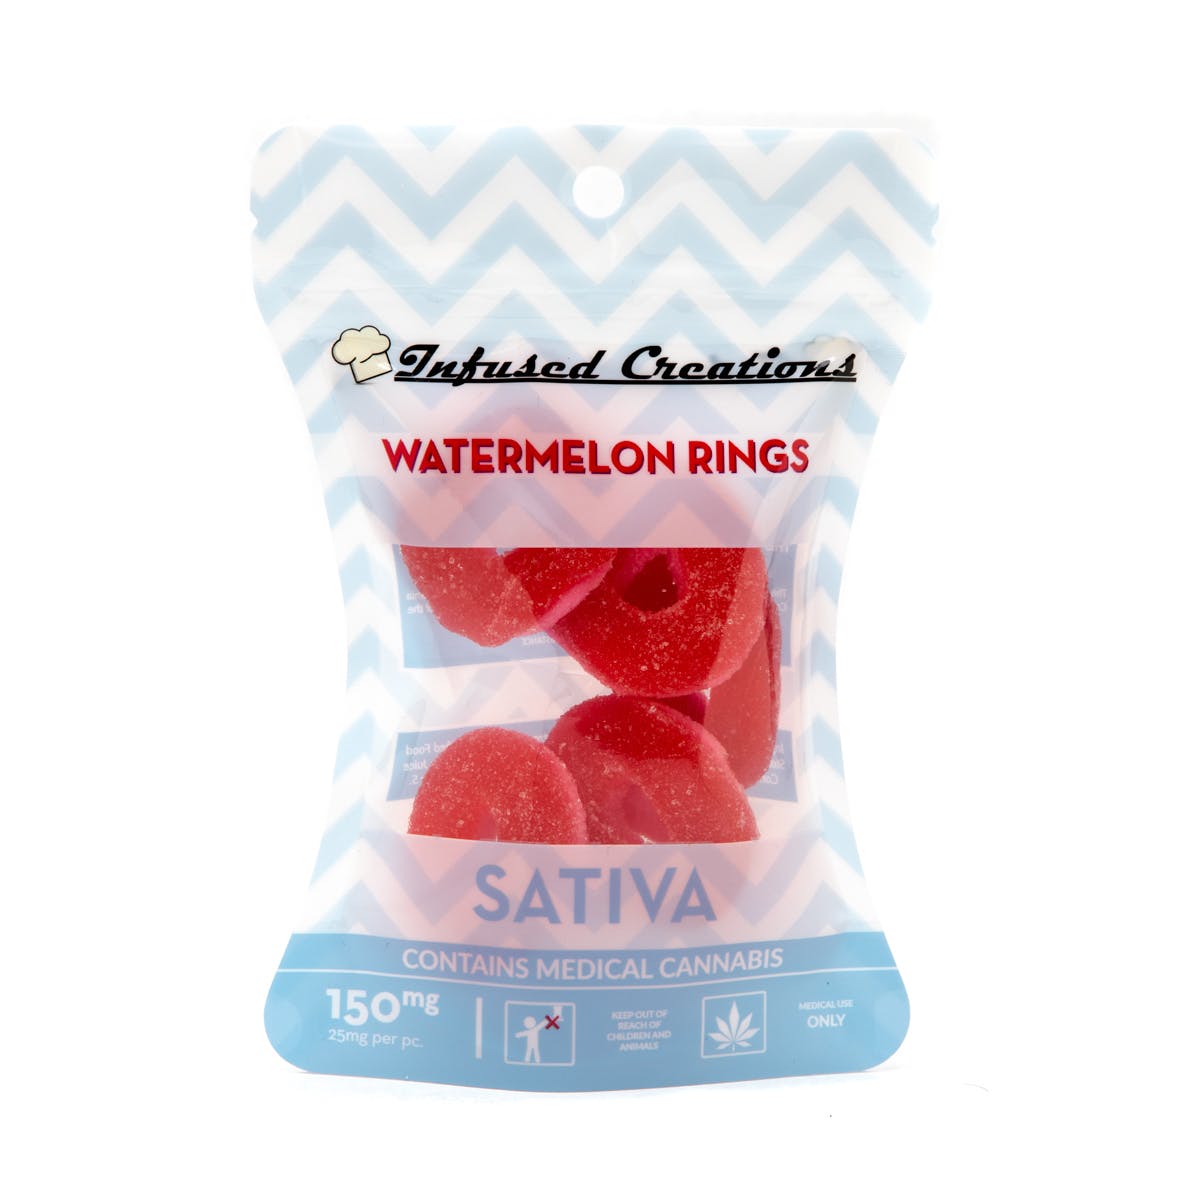 Watermelon Rings Sativa, 150mg